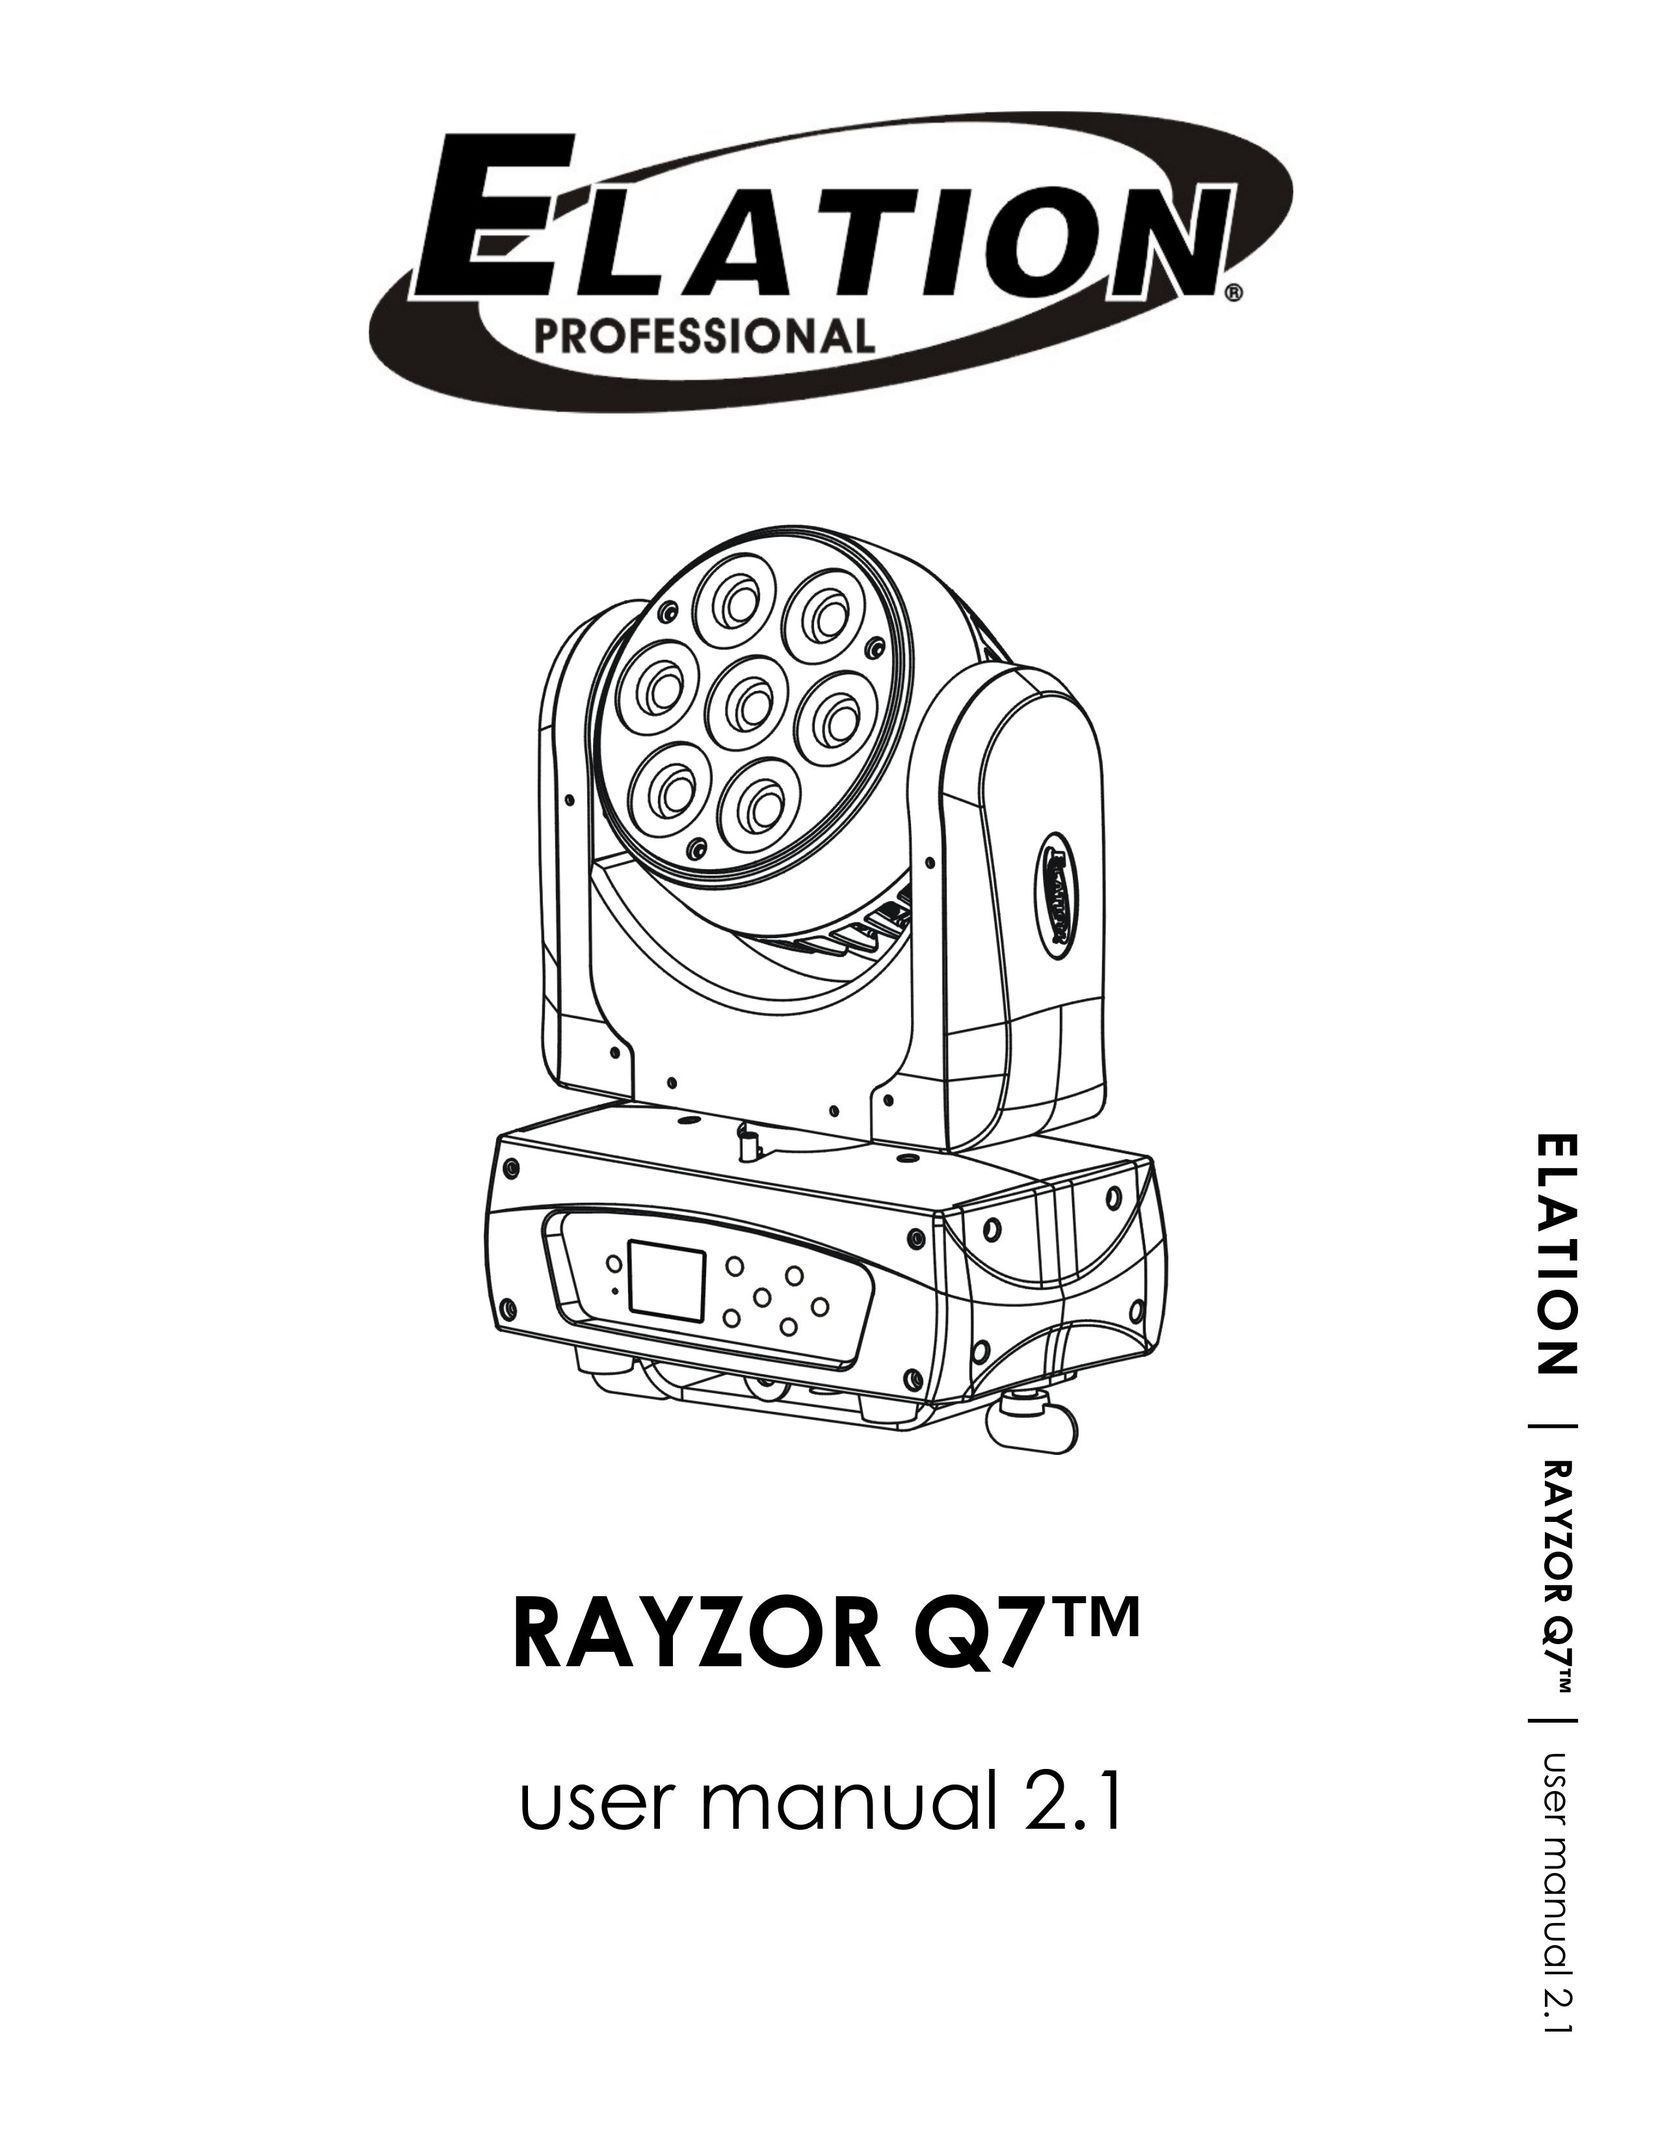 Elation Professional Rayzor Q7 Indoor Furnishings User Manual